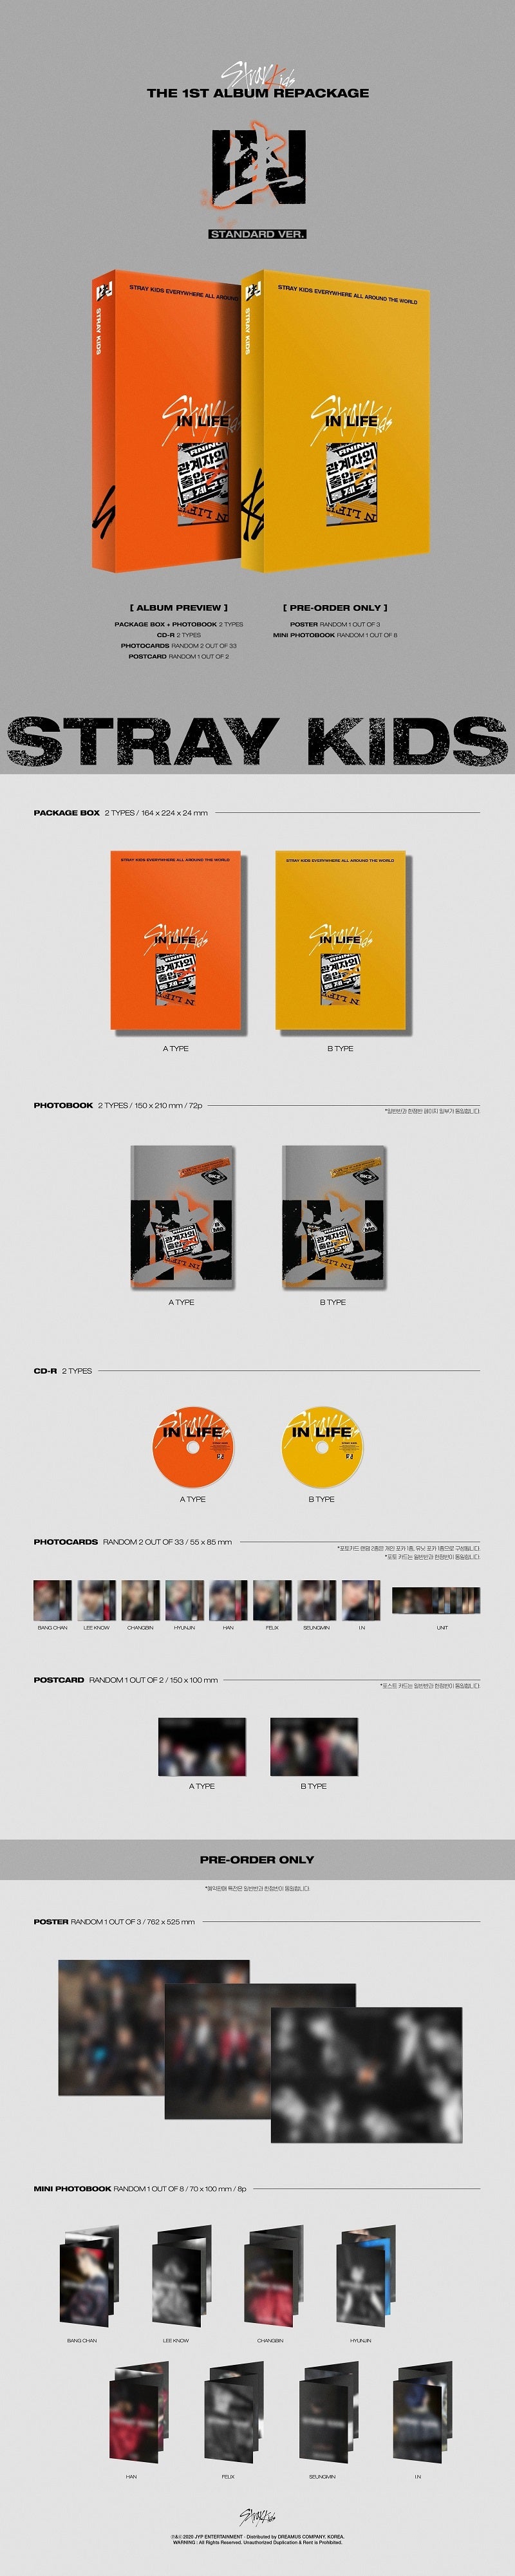 STRAY KIDS REPACKAGE ALBUM VOLUME 1 [IN LIFE] STANDARD VERSION Infographic